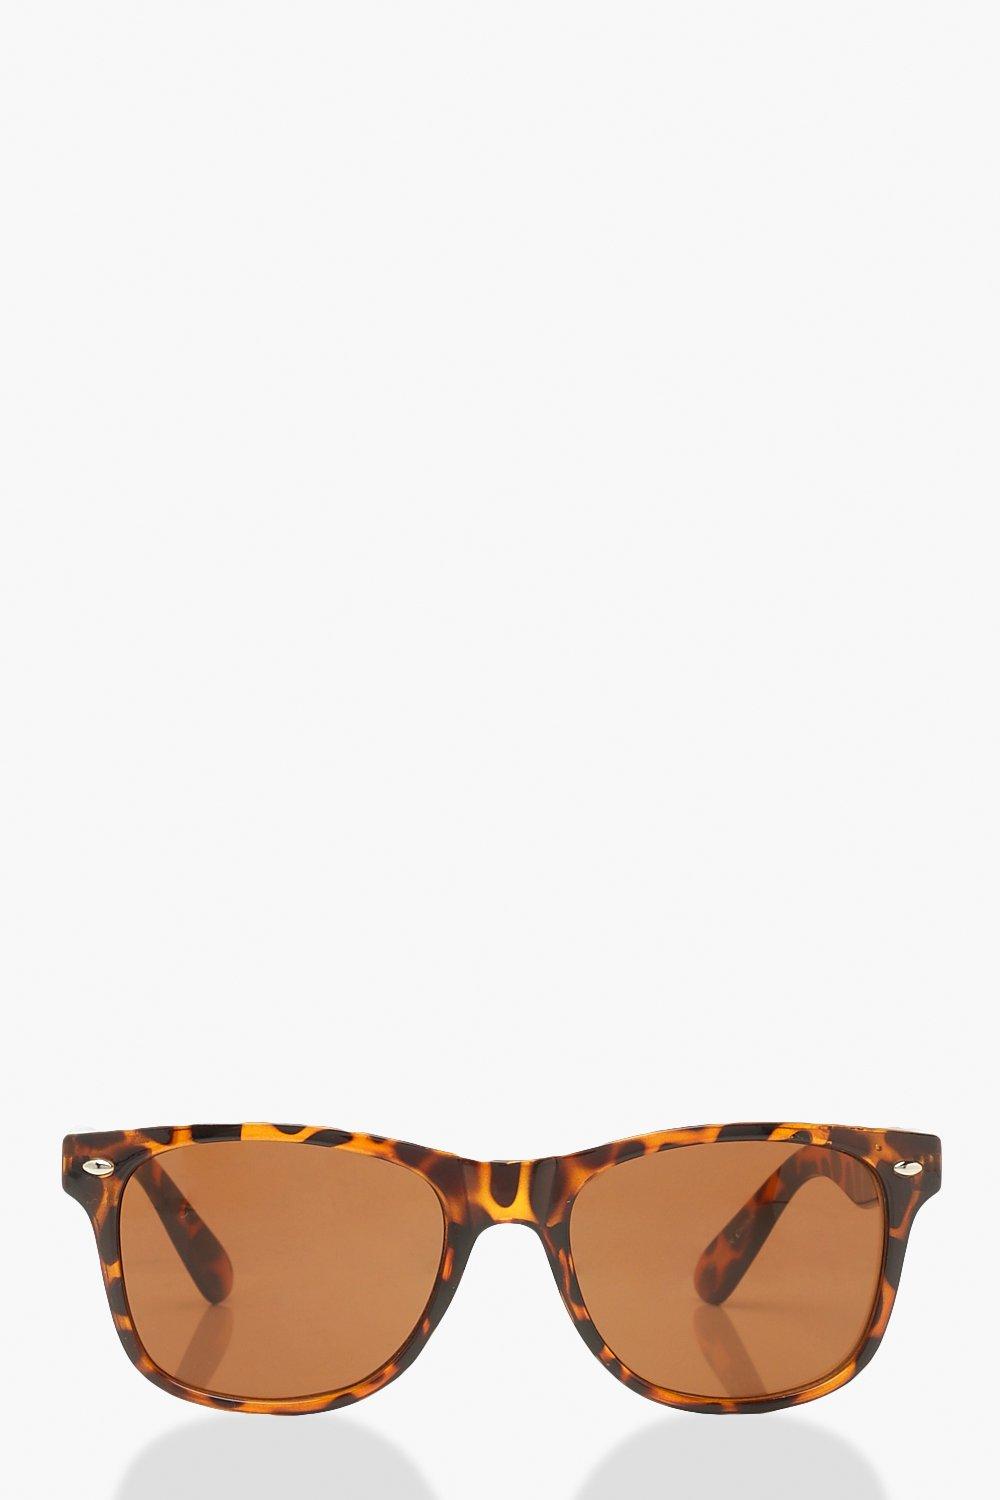 SALE Classic Wayfarer Style Sunglasses